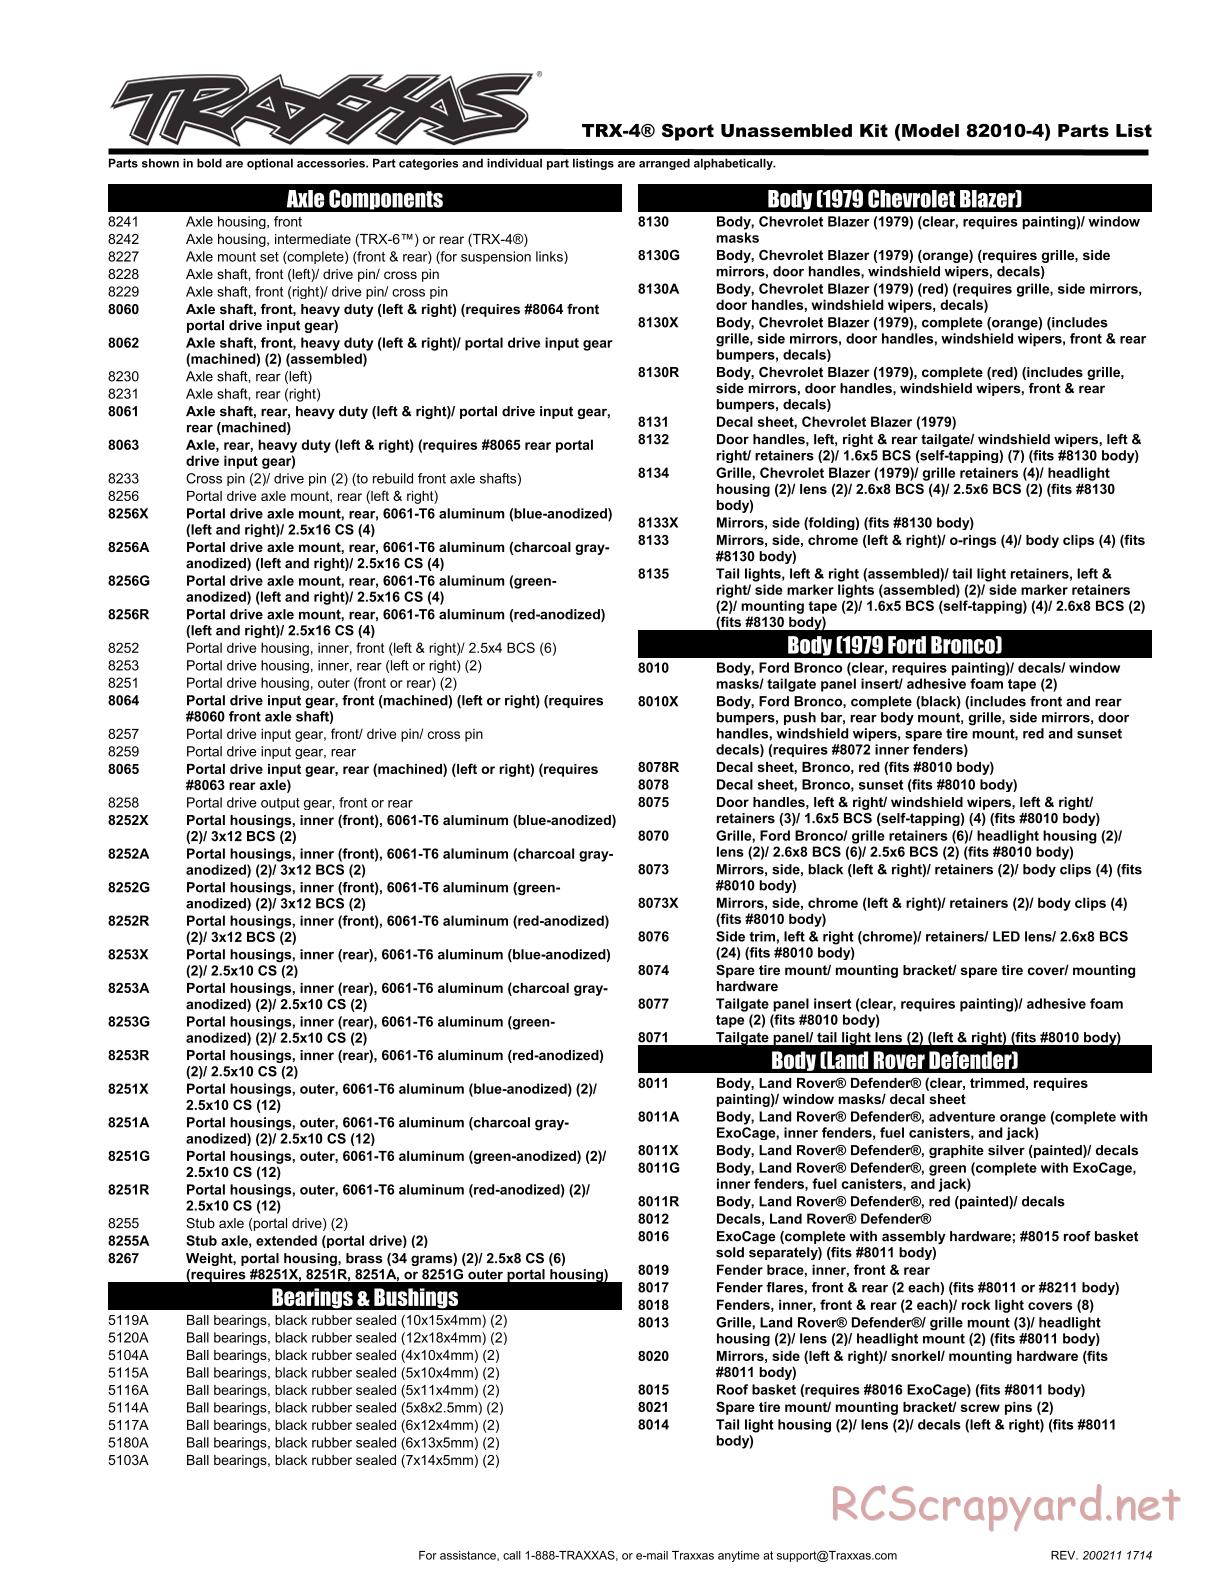 Traxxas - TRX-4 Sport - Parts List - Page 1